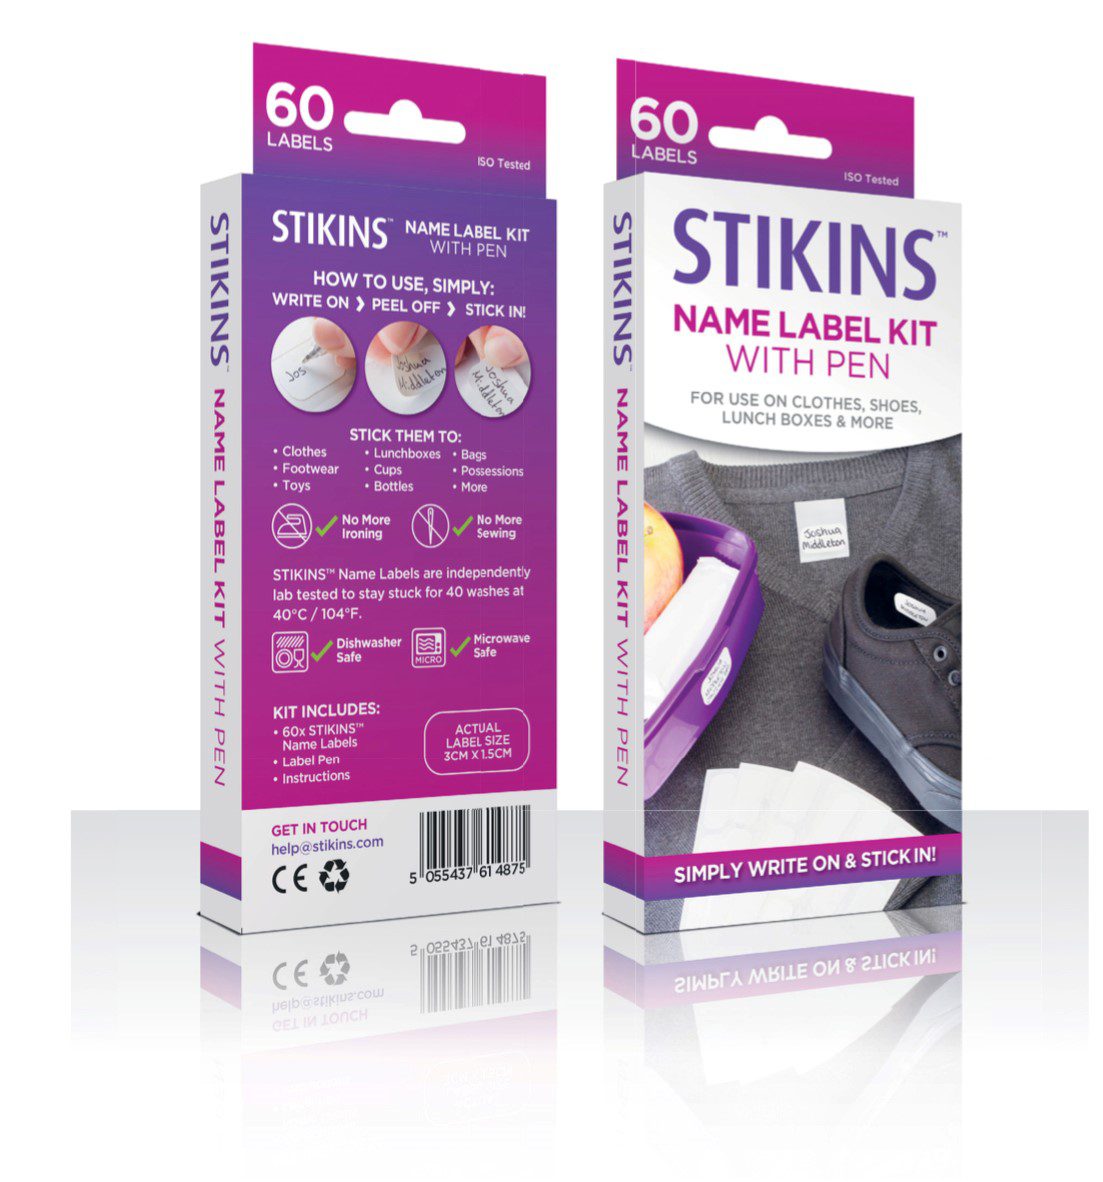 STIKINS Name Label Kit